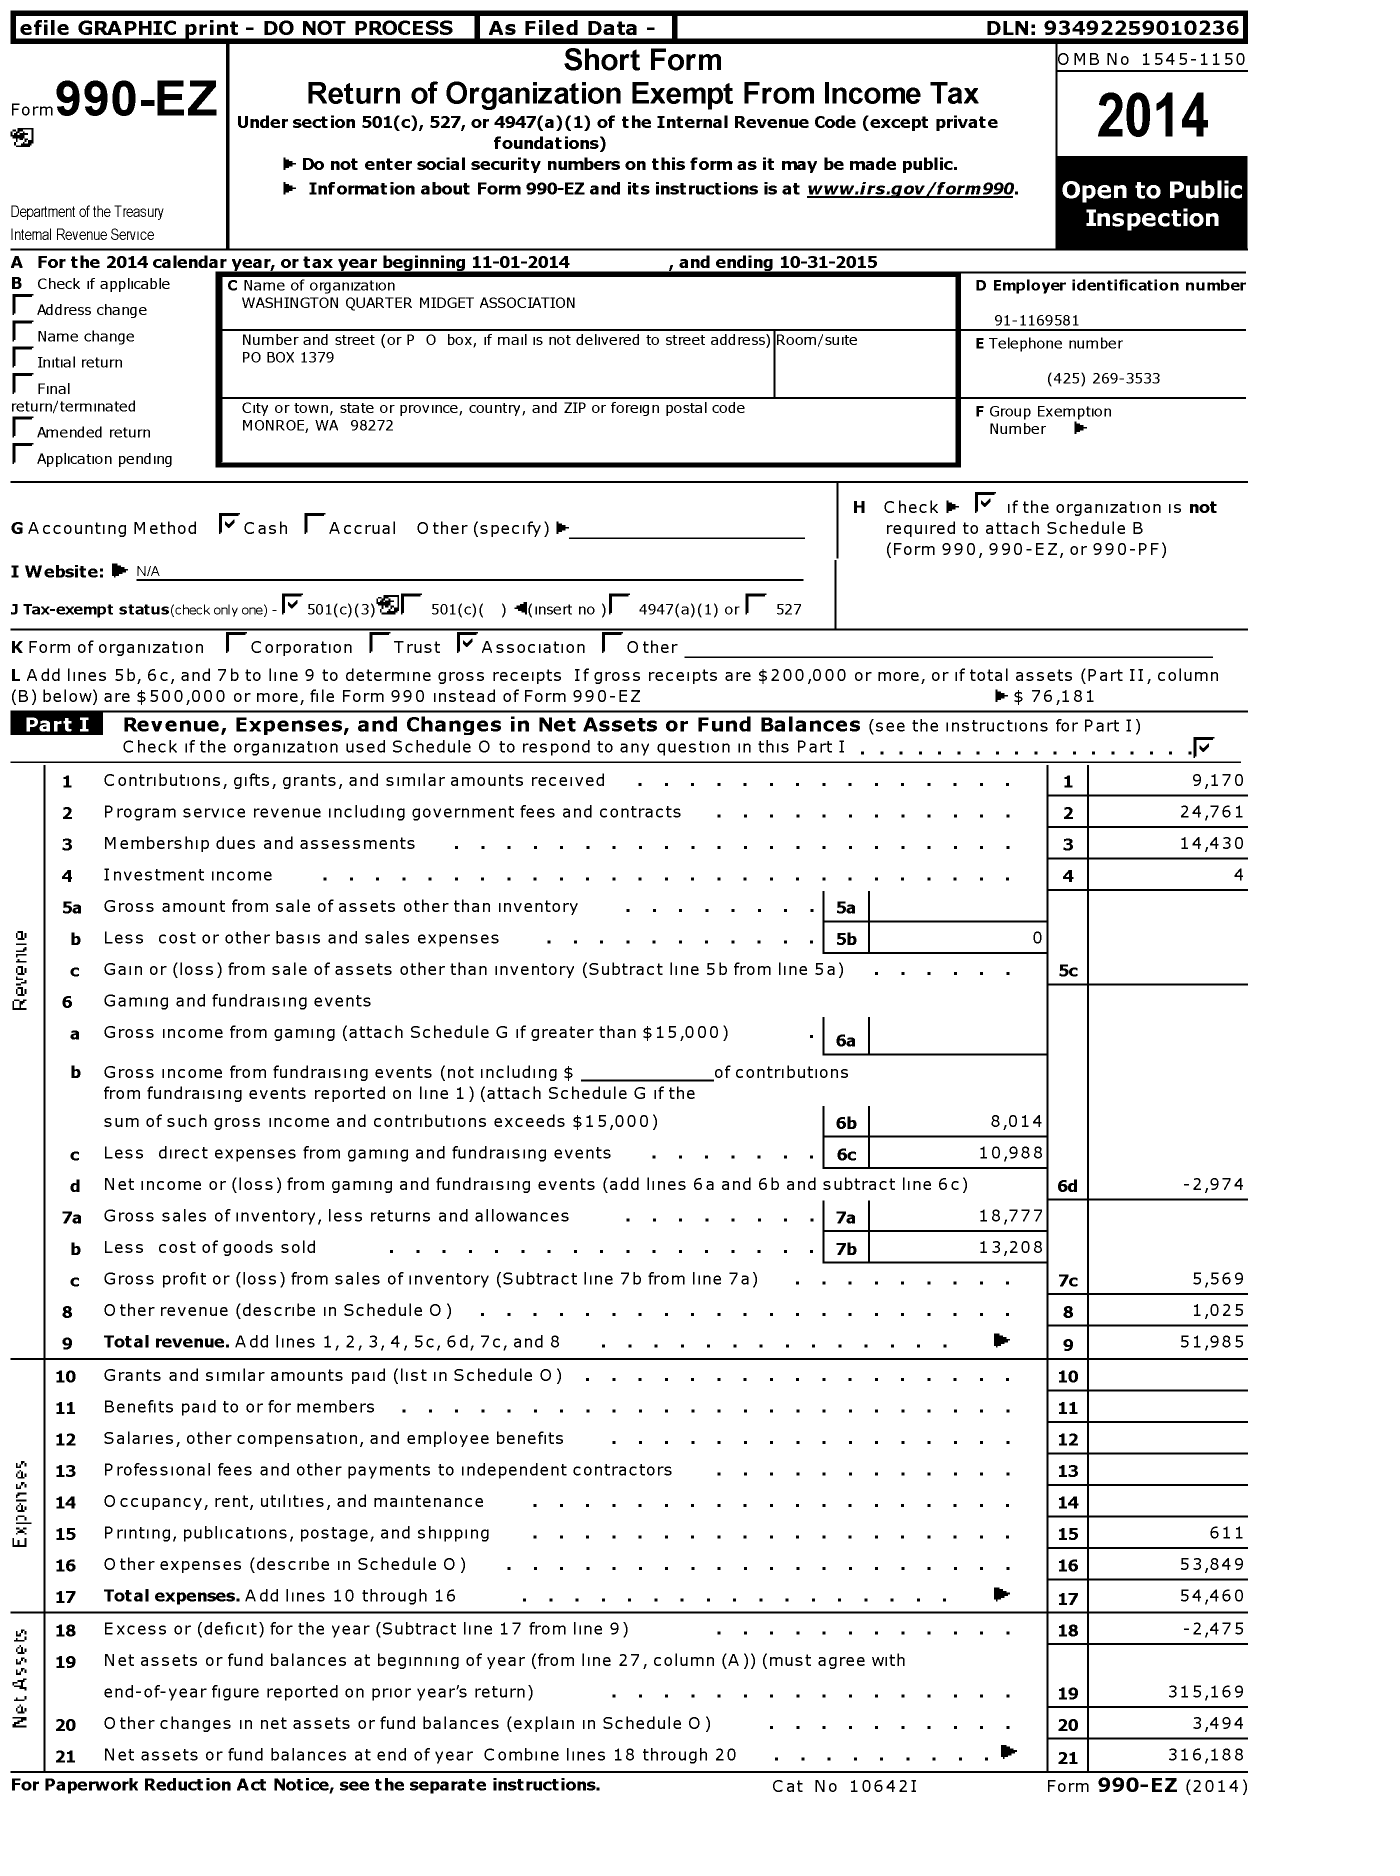 Image of first page of 2014 Form 990EZ for Washington Quarter Midget Association